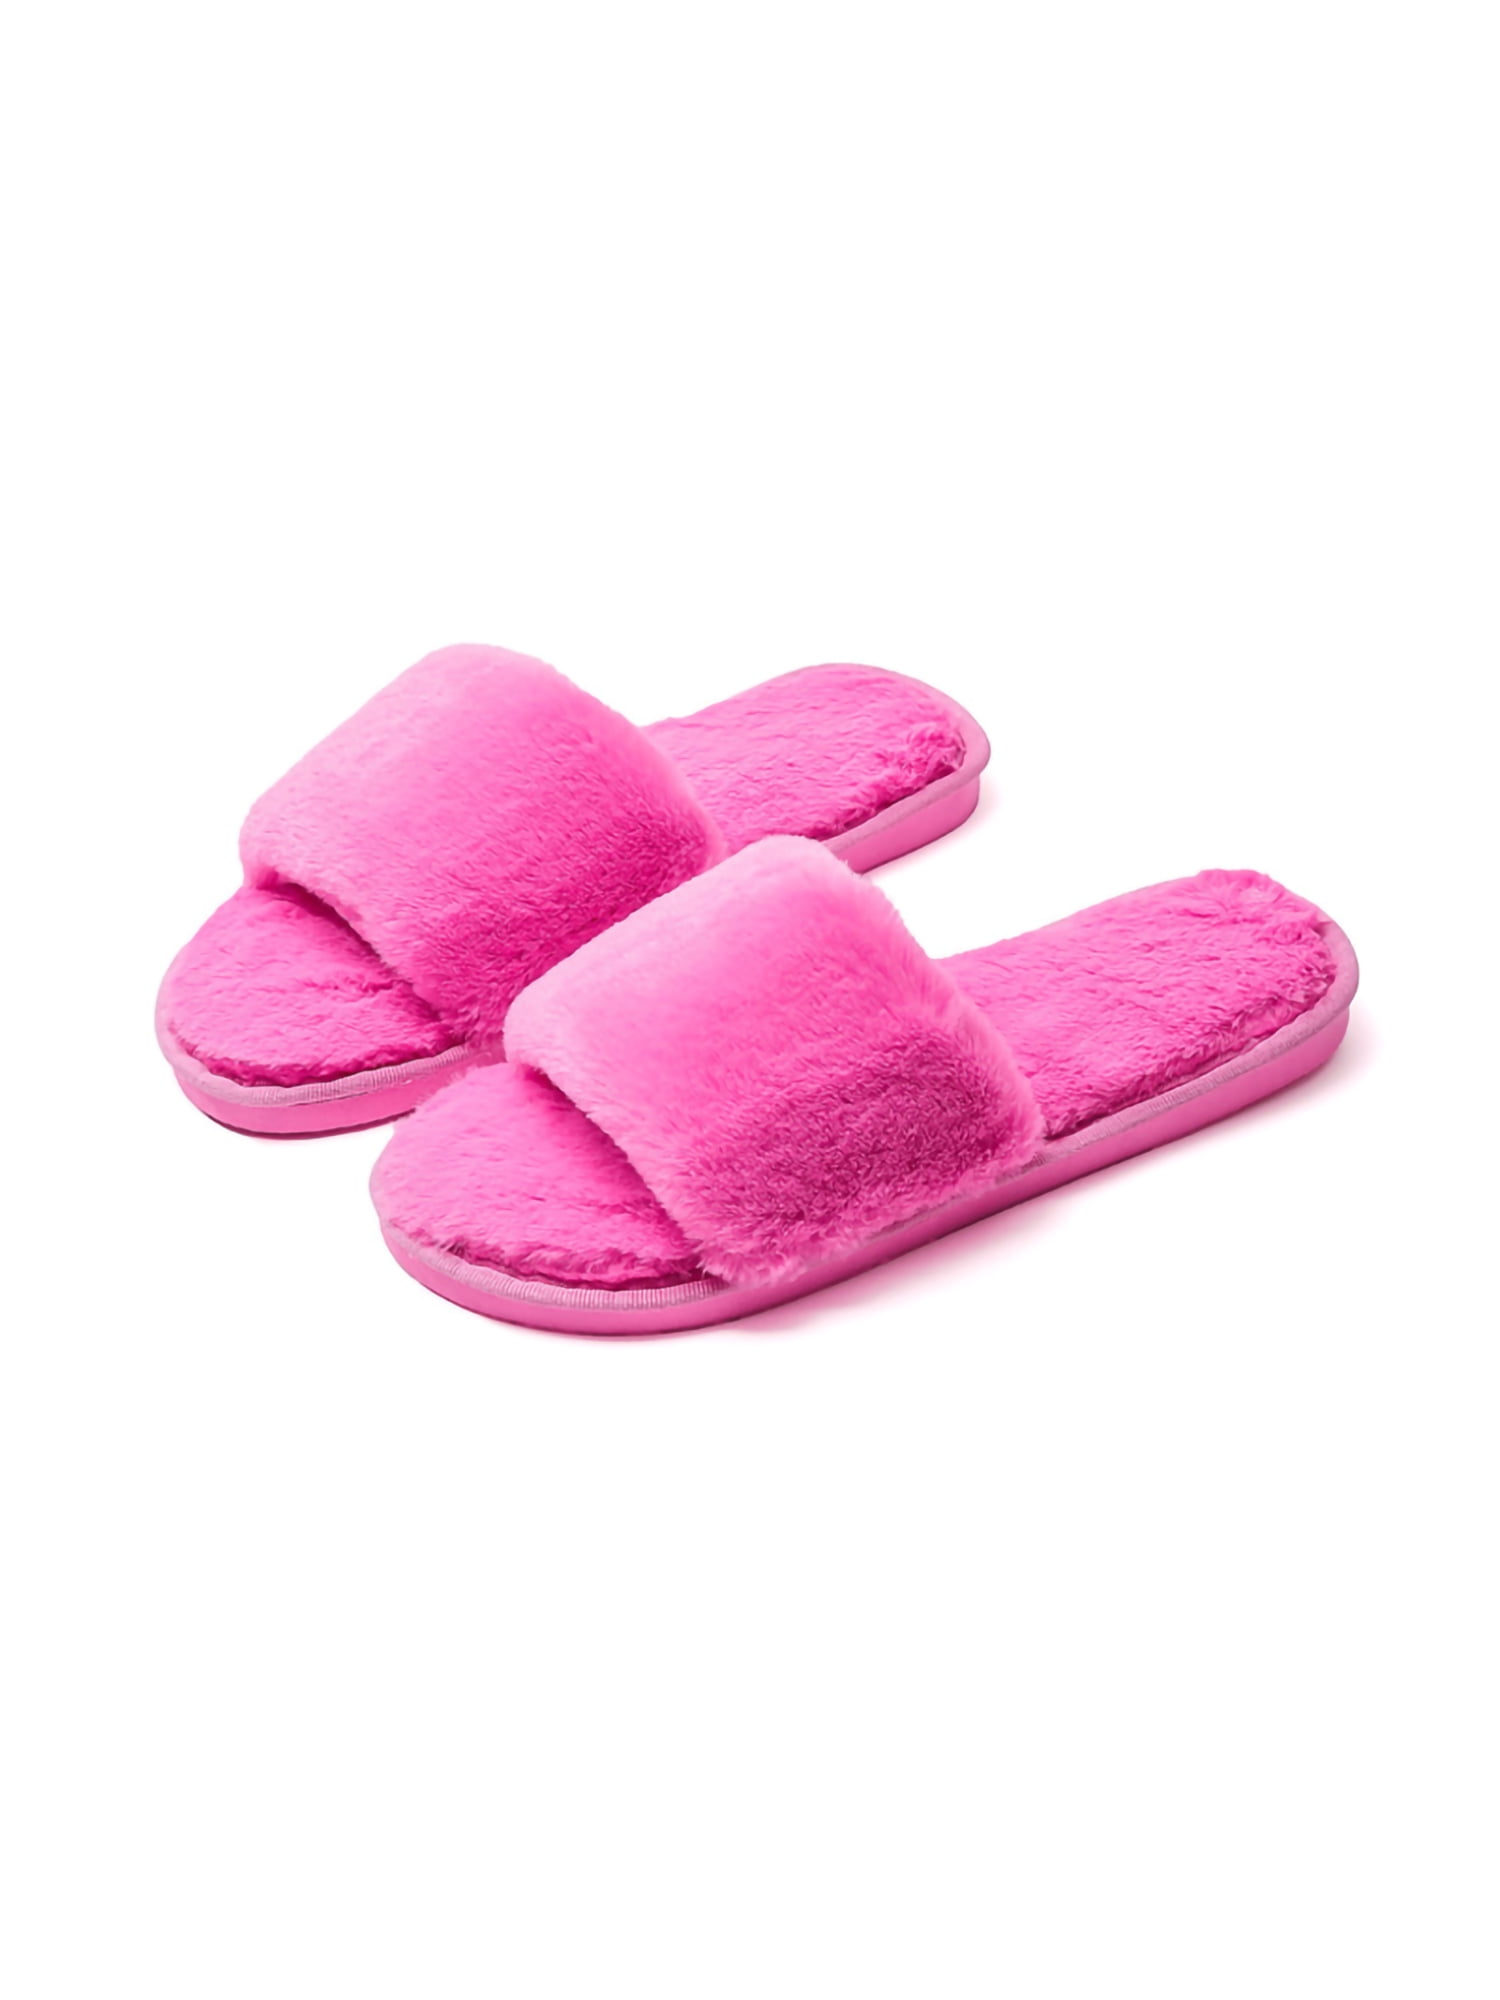 Women's Fluffy Home Slippers, Open Toe Soft Fuzzy Flat Slippers